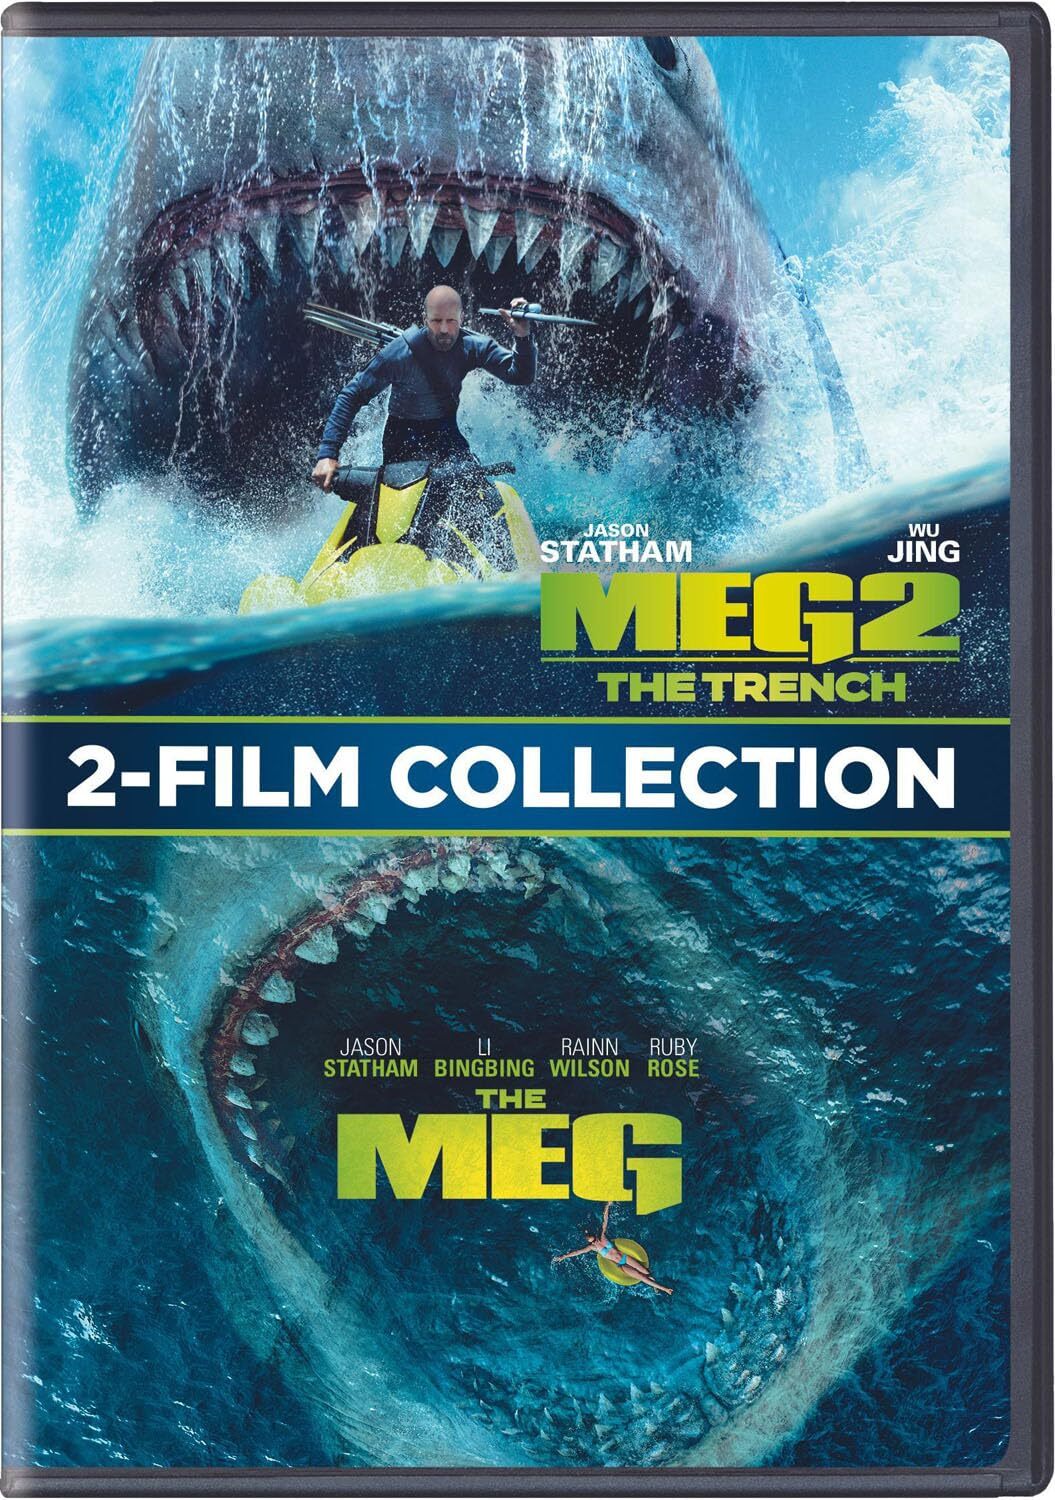 Meg 2 : The Trench (2023) [No 3D Blu-ray] - Blu-ray Forum